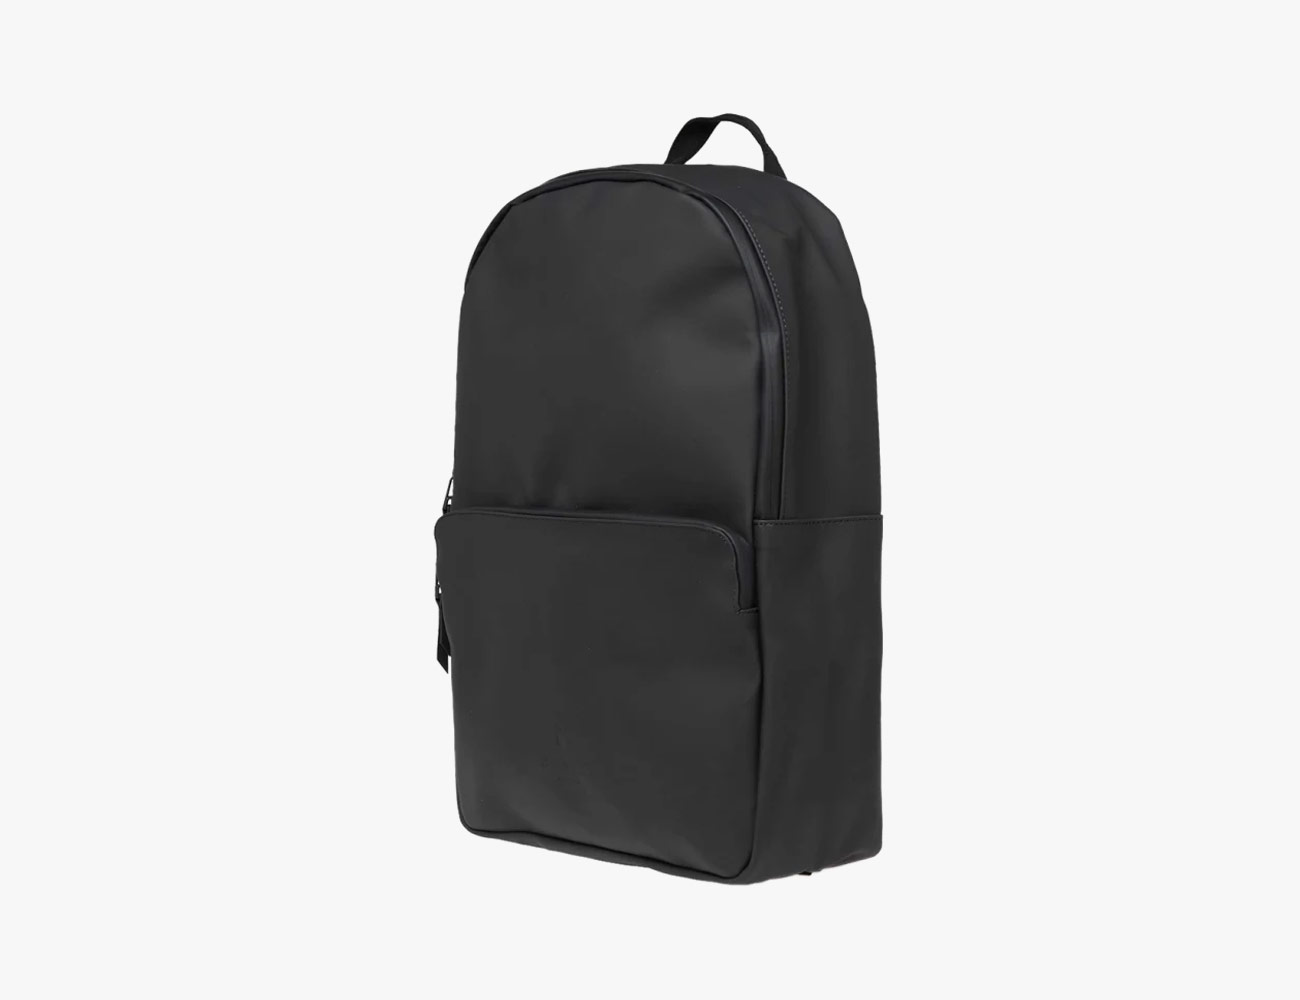 PPFINE It'S A Wonderful Life Multipurpose Backpack Laptop Bag Basic Satchel For Daily School Travel